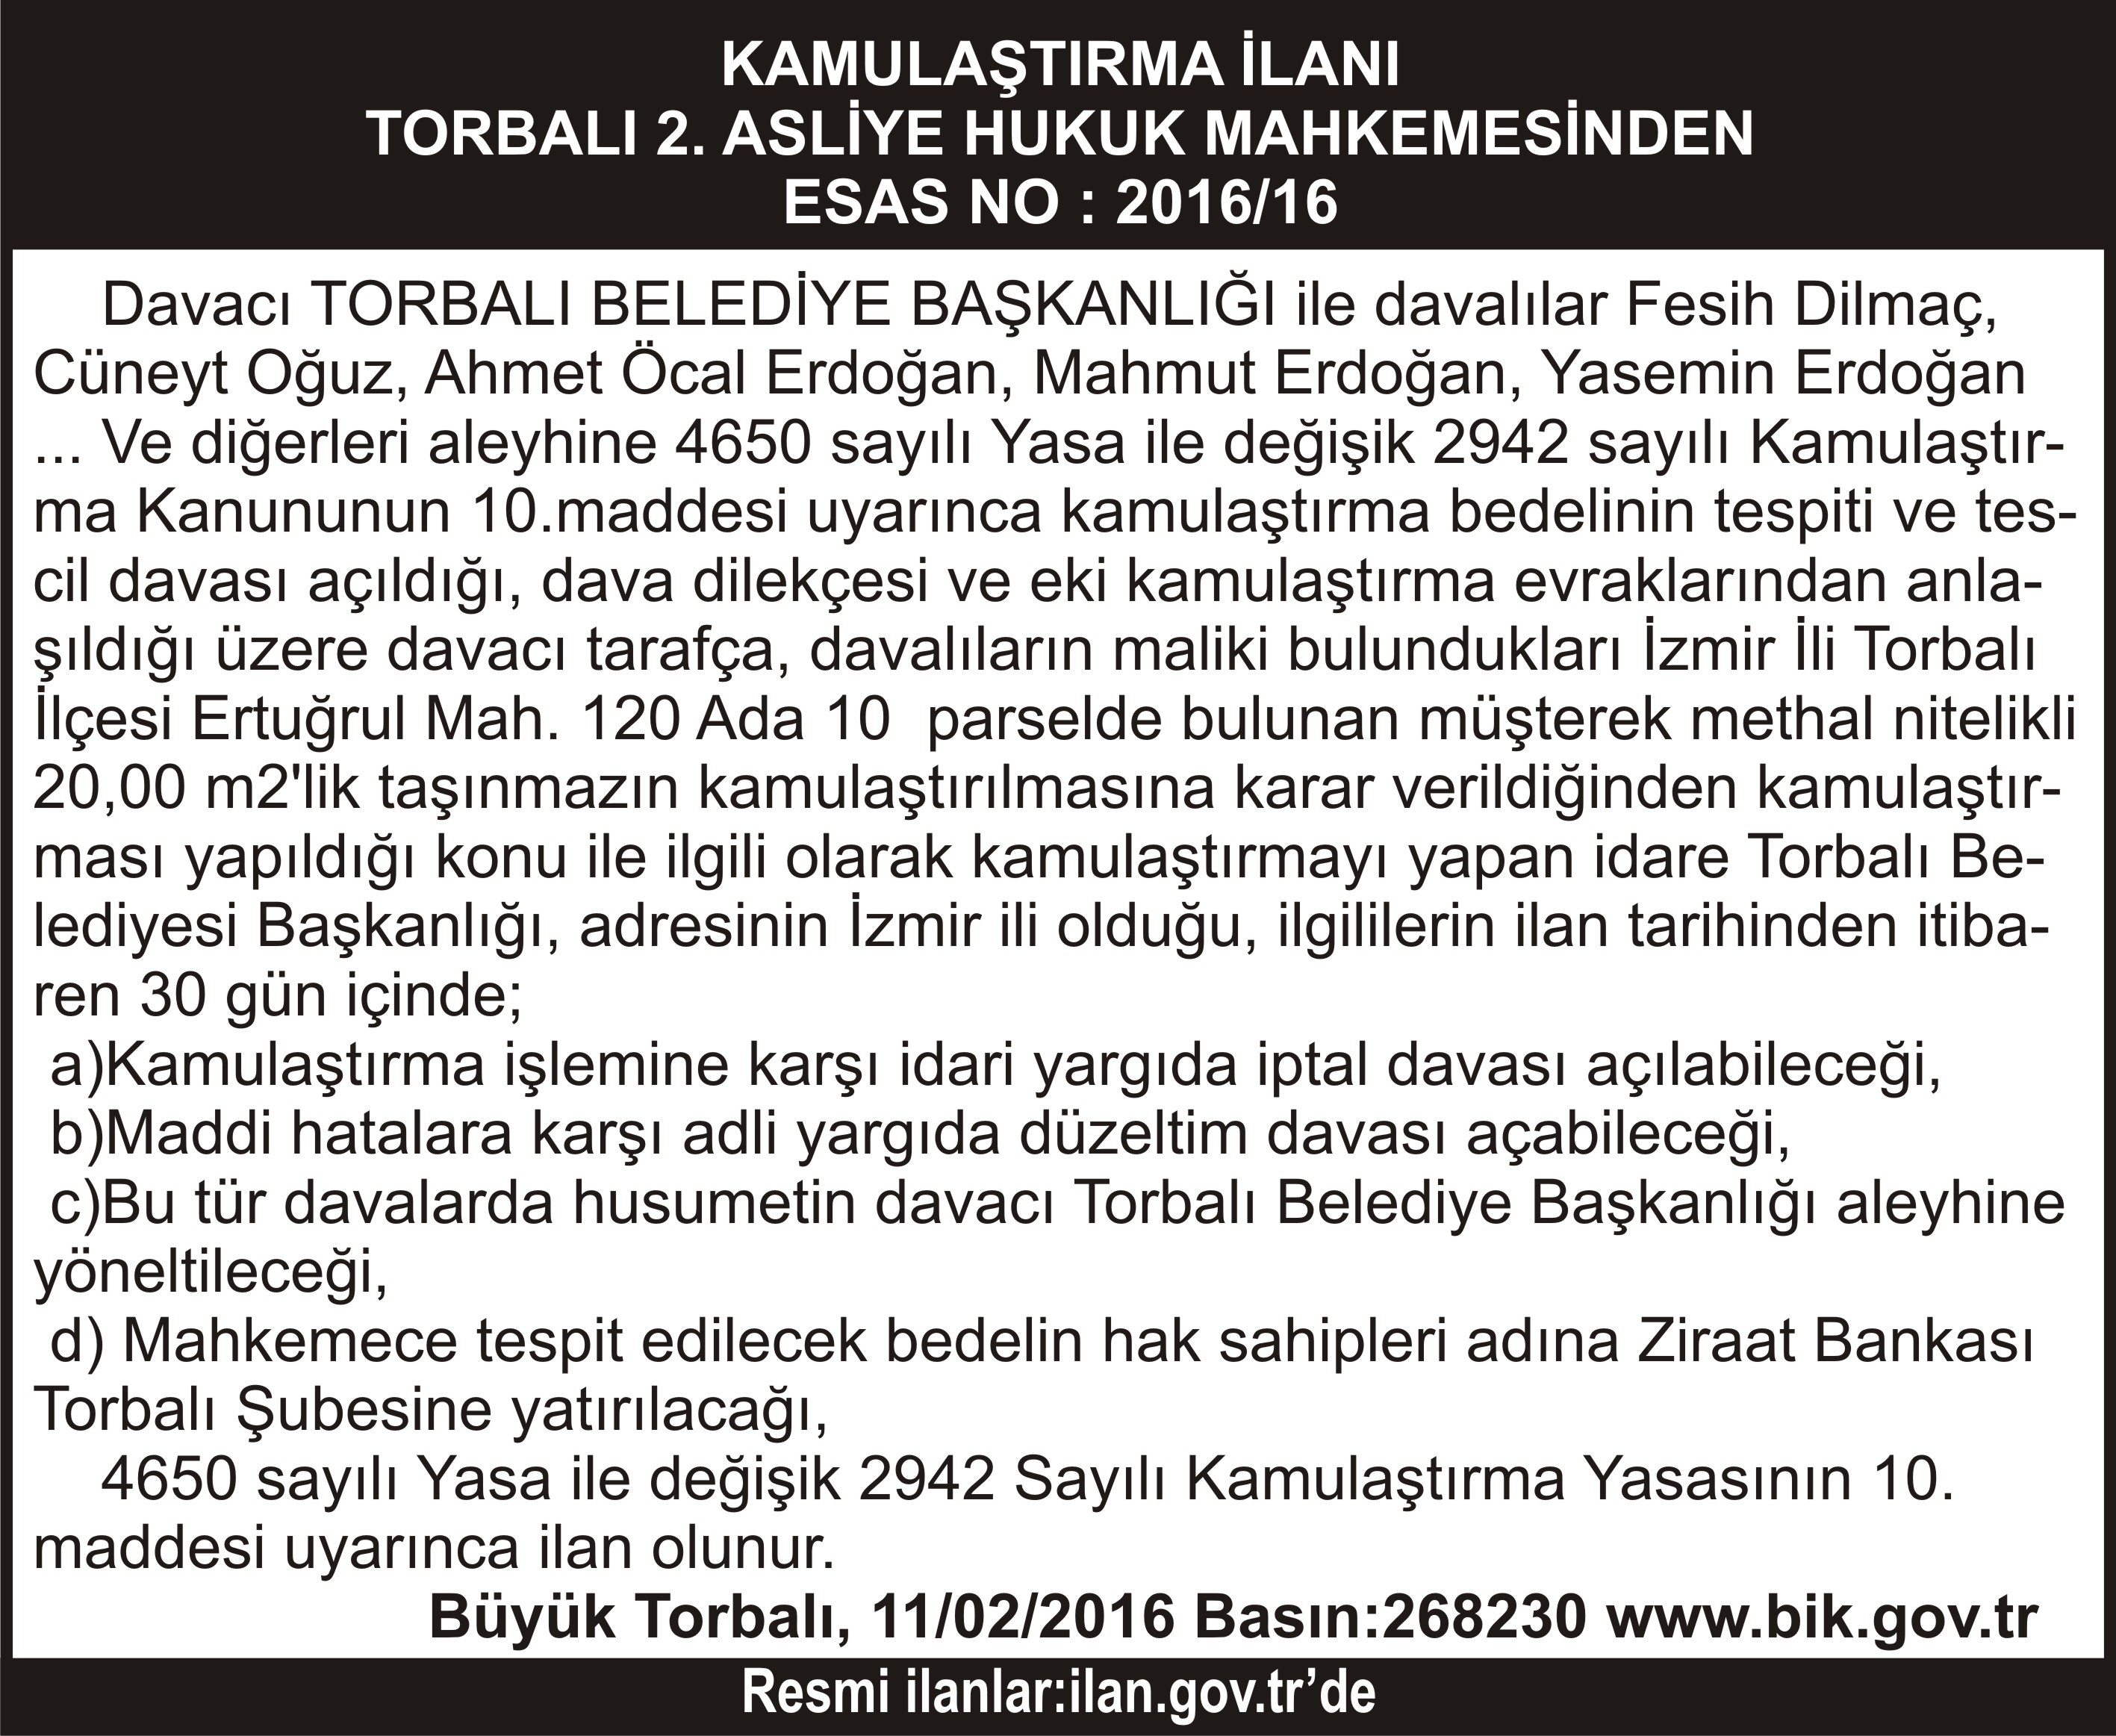 KAMULAŞTIRMA İLANI TORBALI 2 ASLİYE HUKUK MAHKEMESİNDEN BASIN.268230 05.03.2016